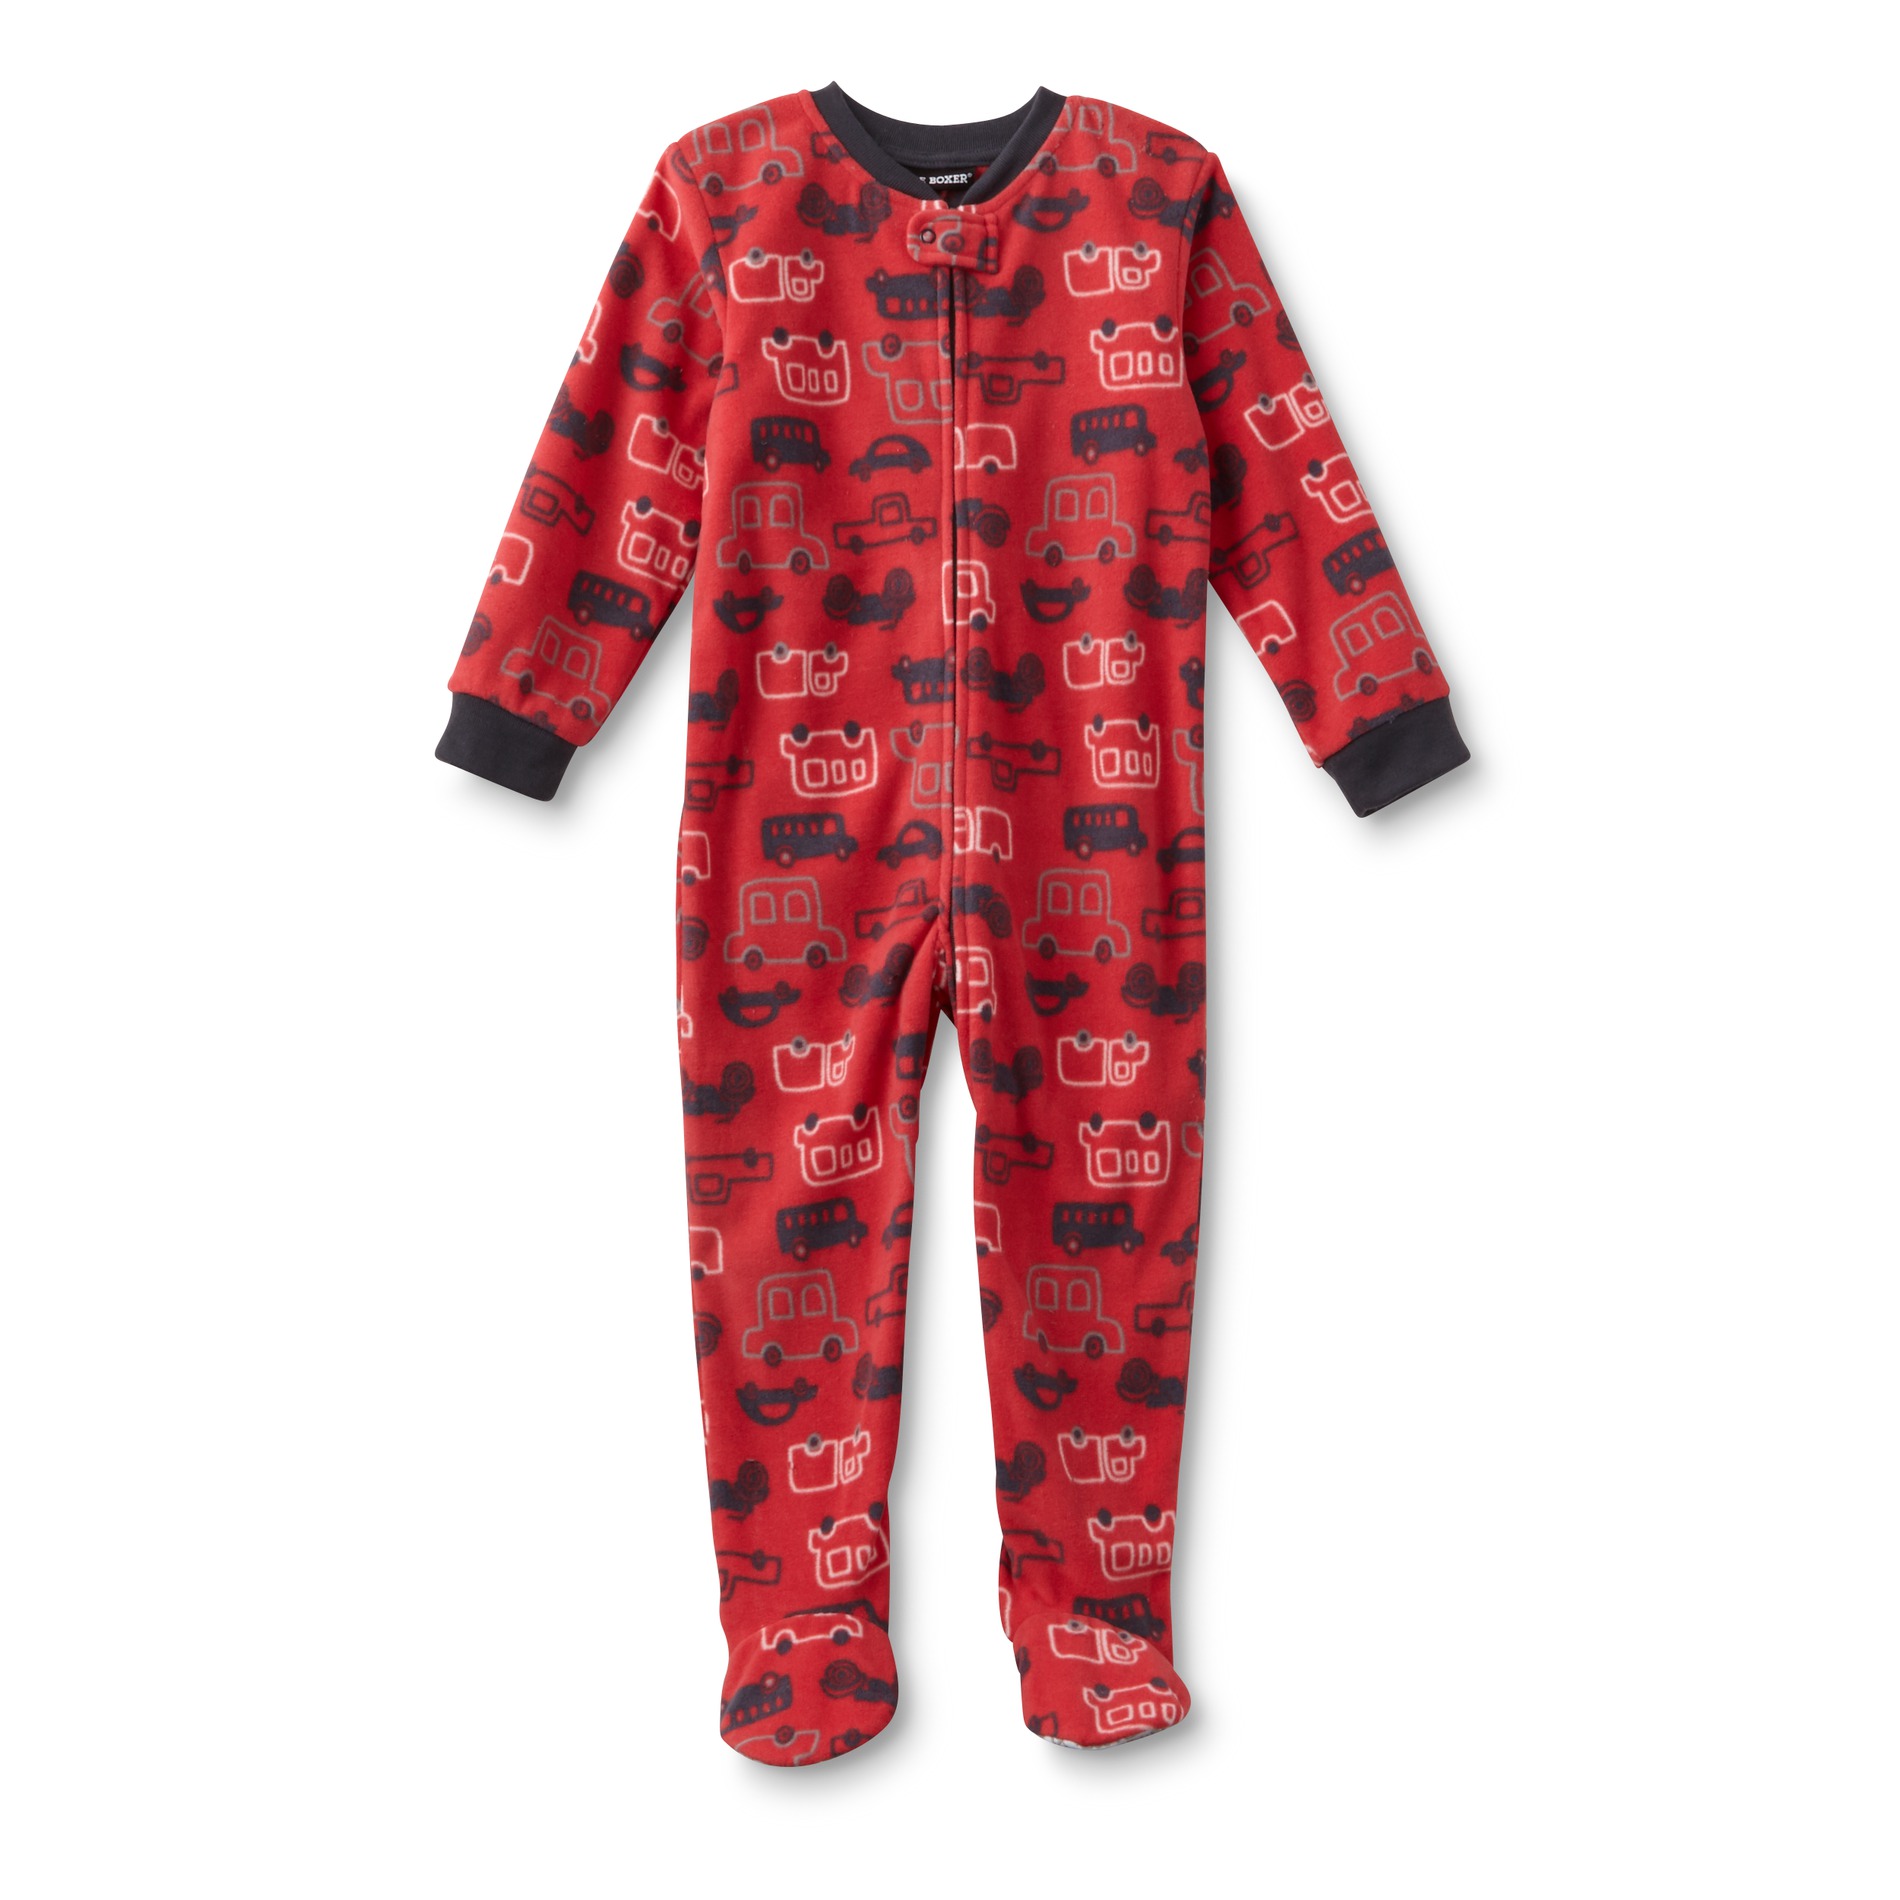 Joe Boxer Infant & Toddler Boy's Sleeper Pajamas - Trucks